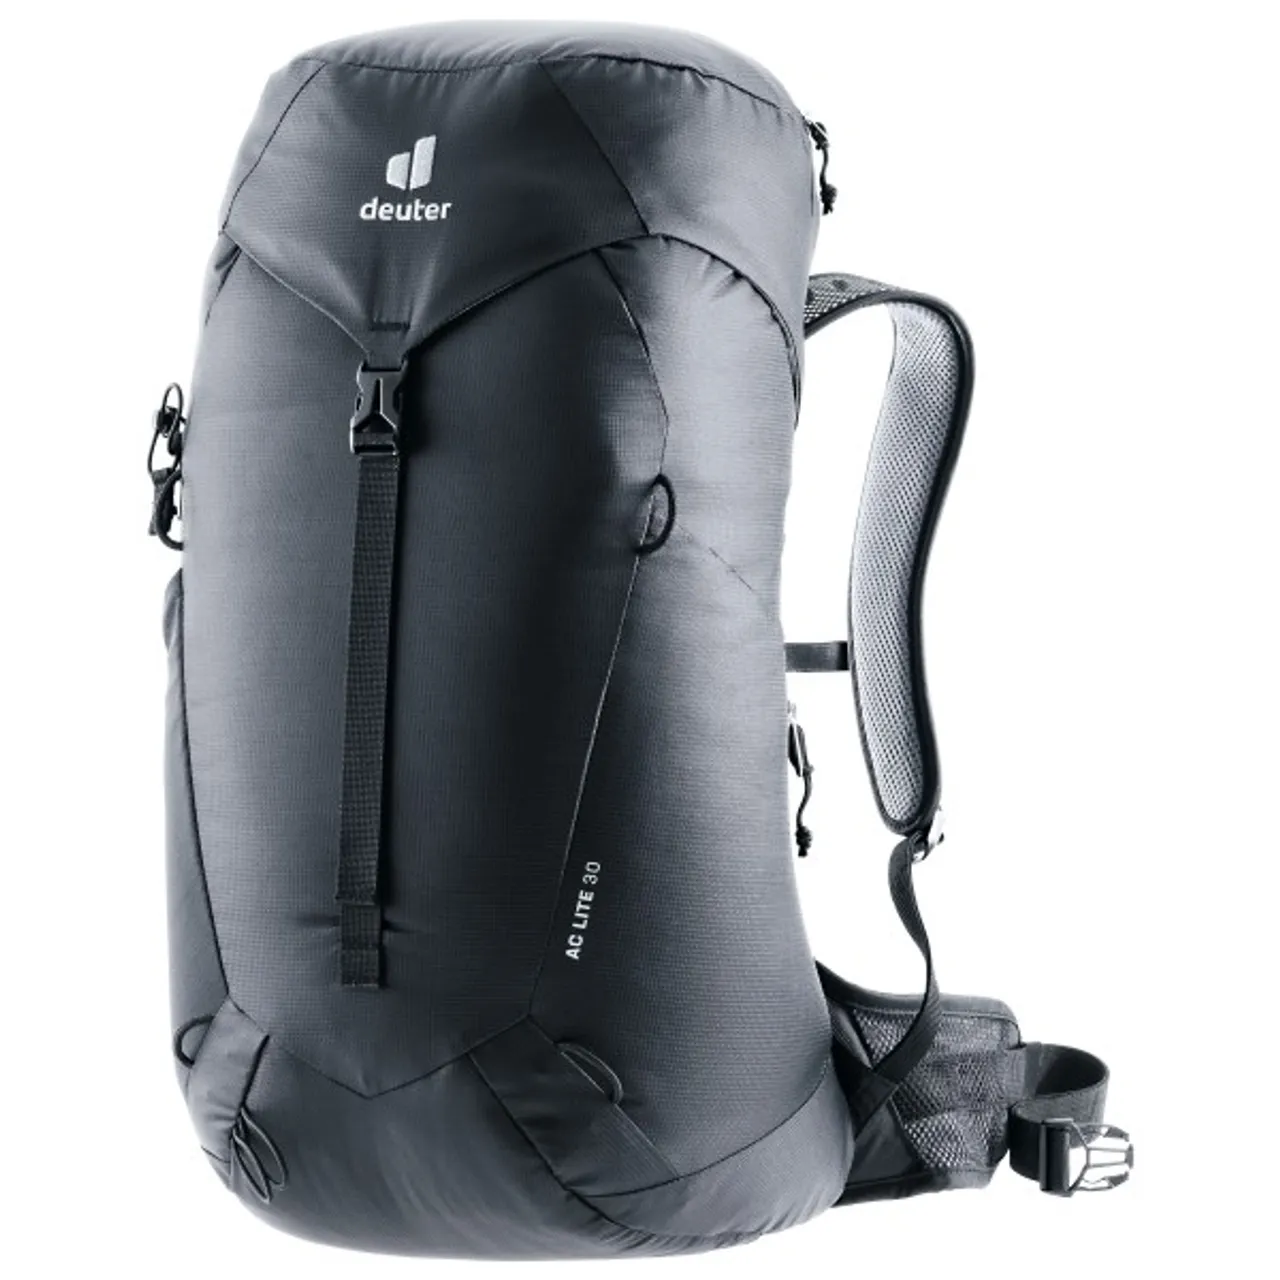 Deuter - AC Lite 30 - Walking backpack size 30 l, grey